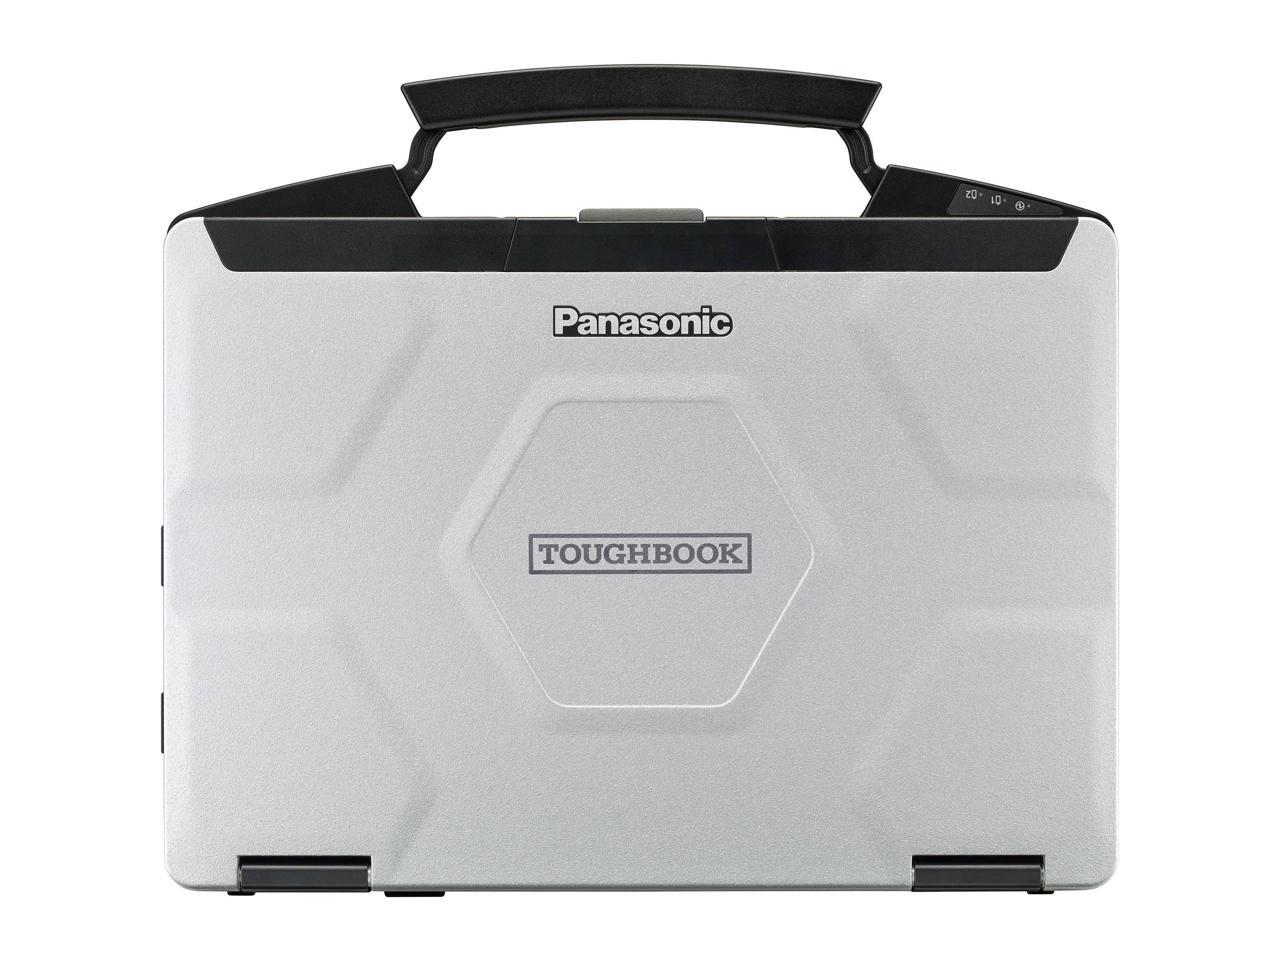 Panasonic Toughbook CF-54 Laptop PC Bundle with Laptop Bag, Intel Core i5-7300U 2.6GHz, 8GB RAM, 500GB SSD, Windows 10 Pro